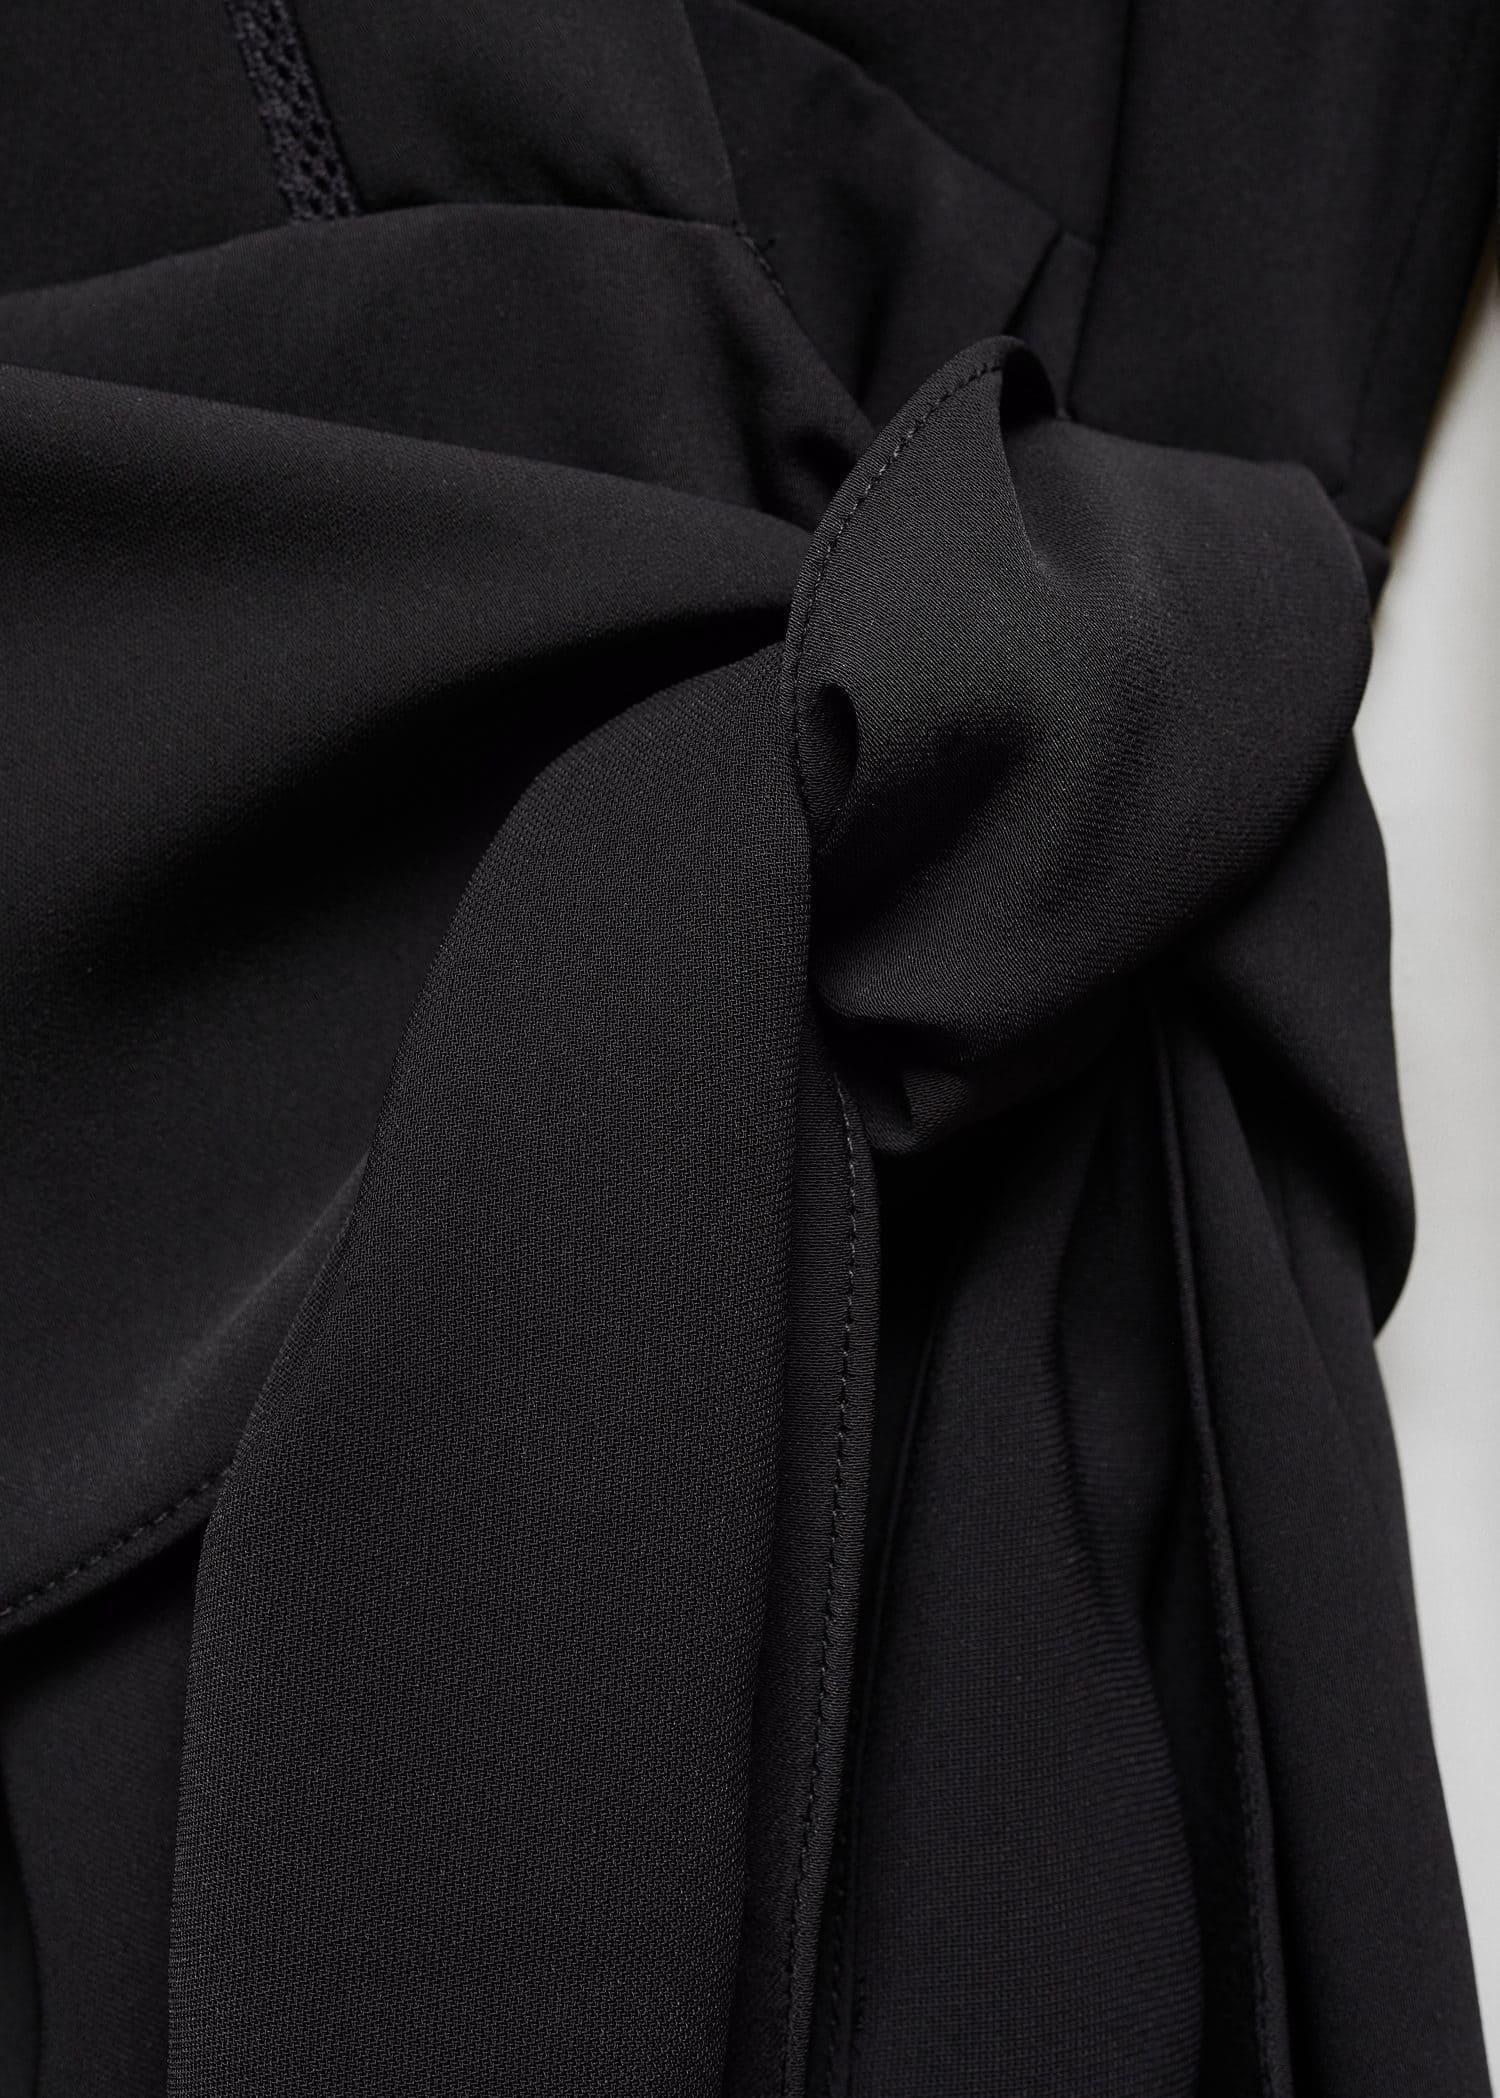 Mango - Black Bow Wrap Dress